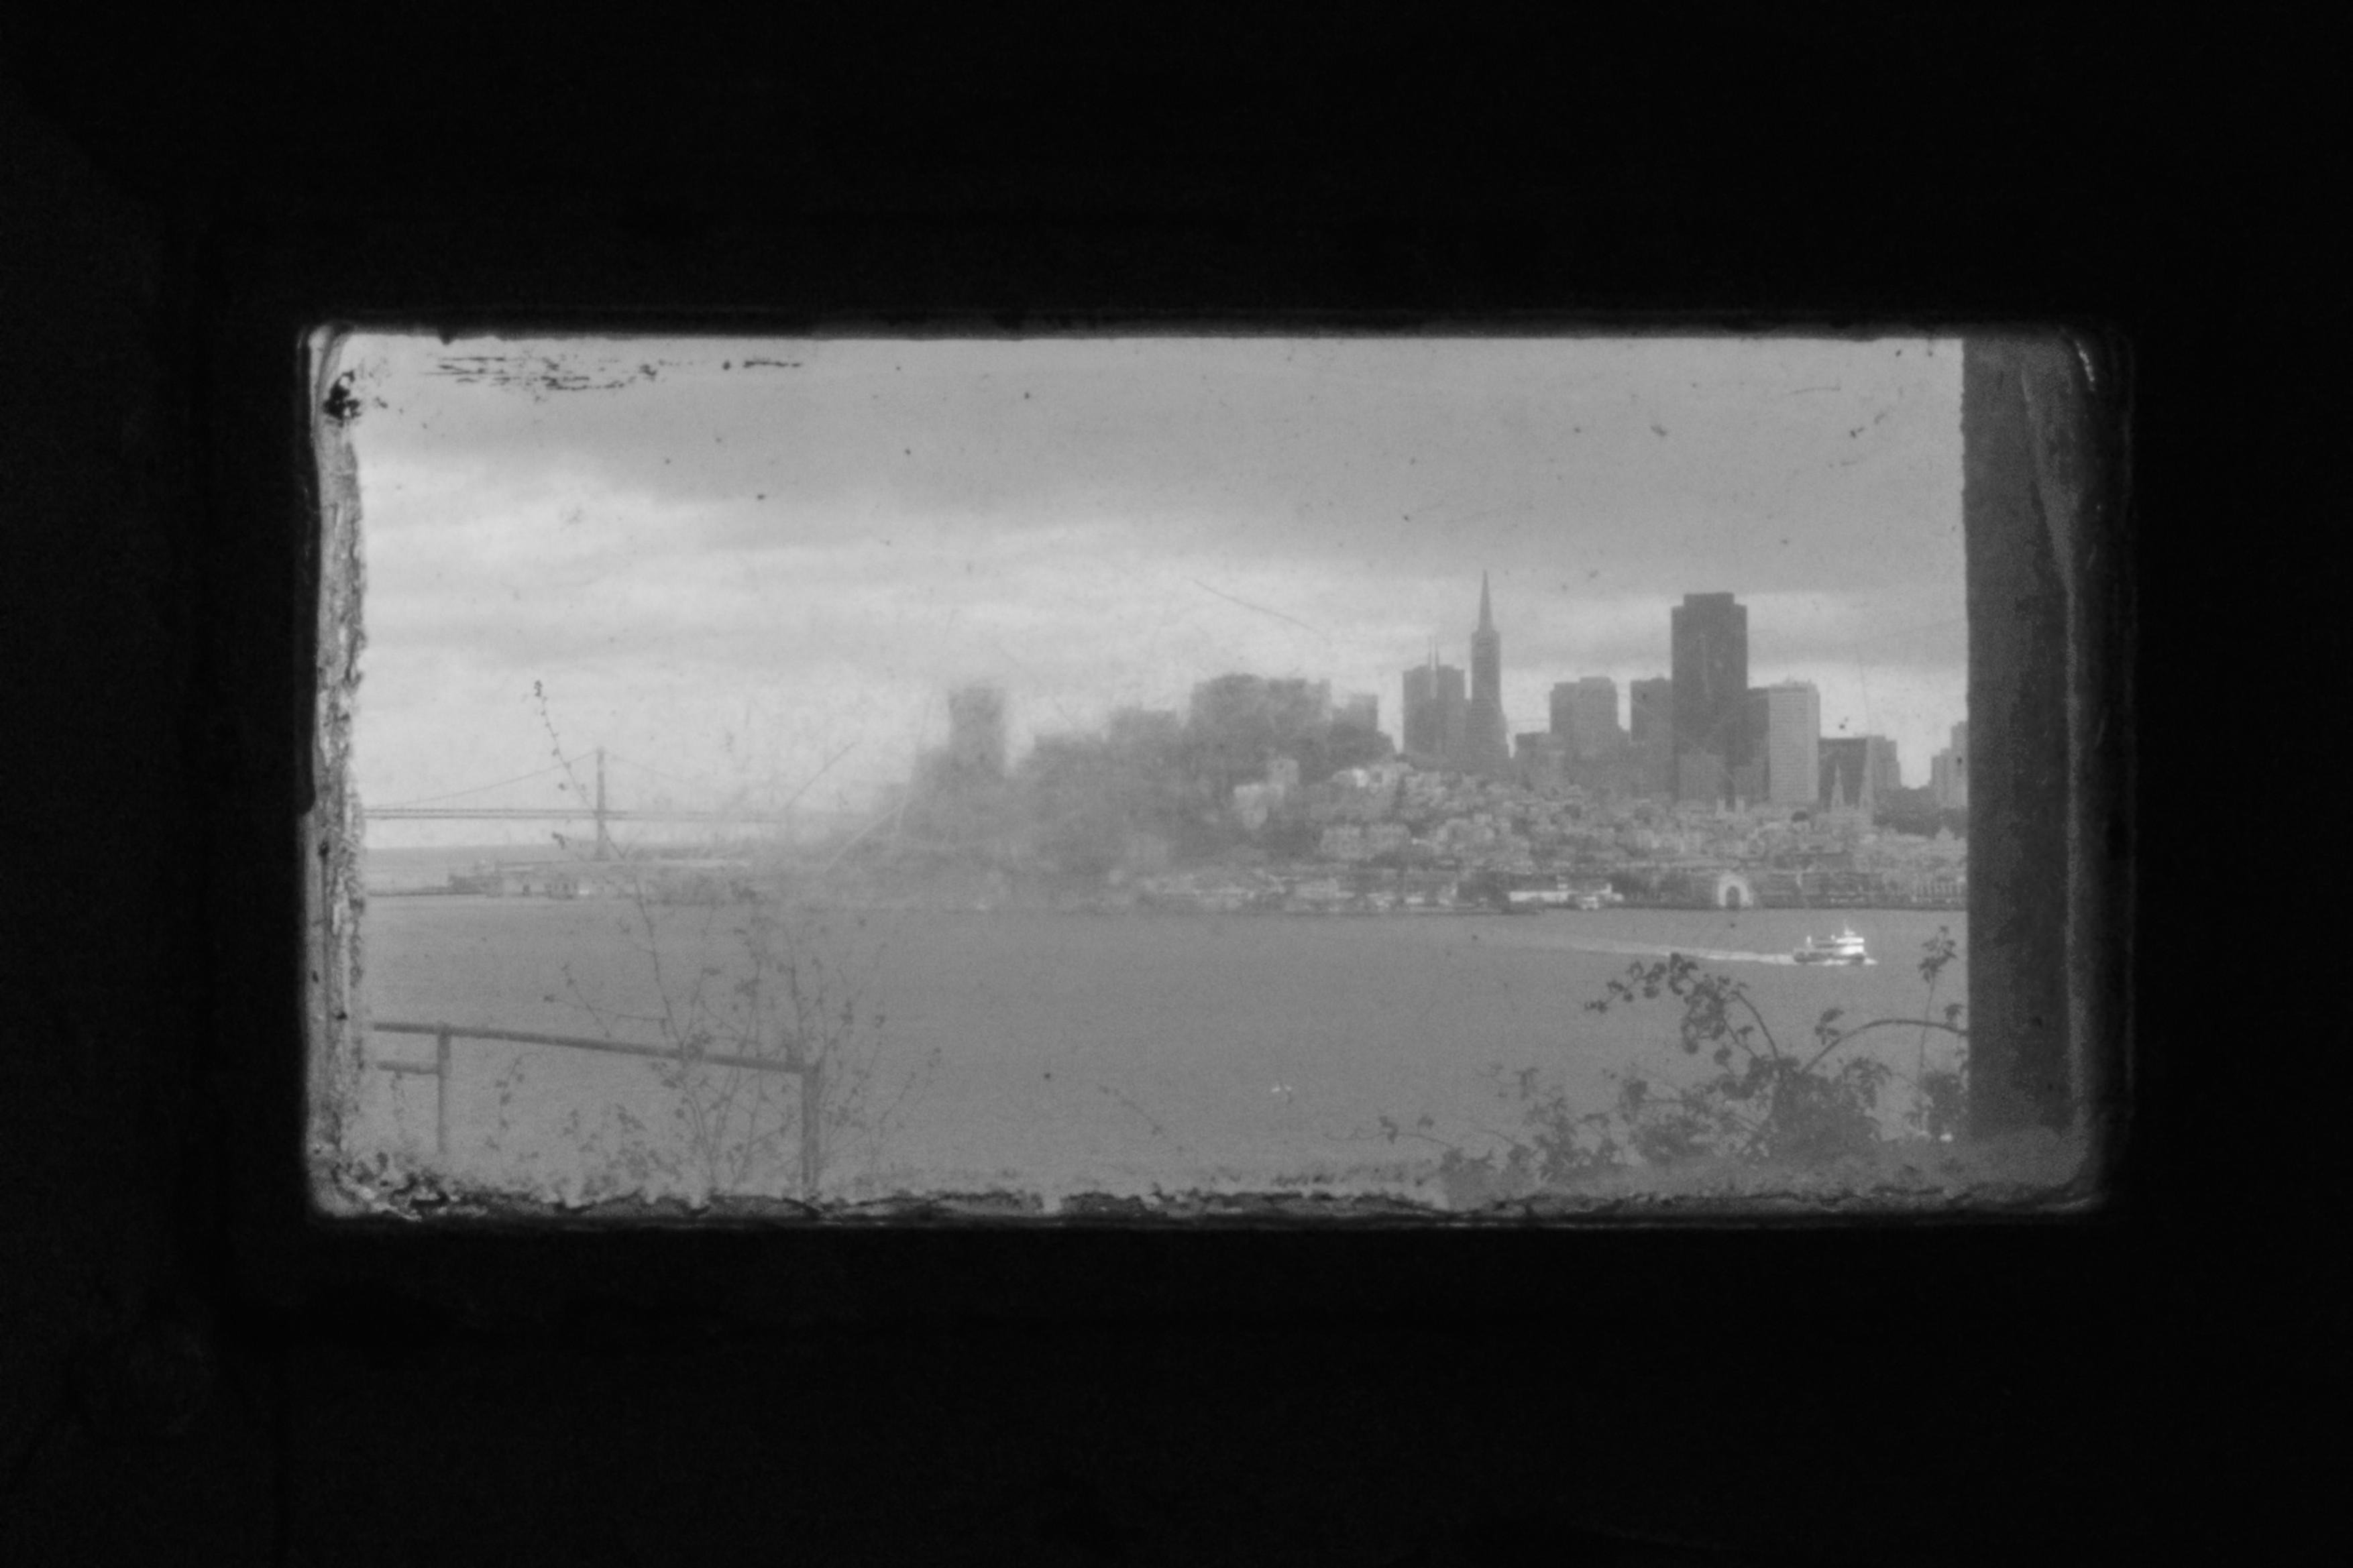 old photos, Monochrome, History, Photography, San Francisco, USA, Alcatraz, Prison, Window, Dirt, City, Cityscape, Building, Sea, Skyscraper, Trees, Ship, Glass Wallpaper